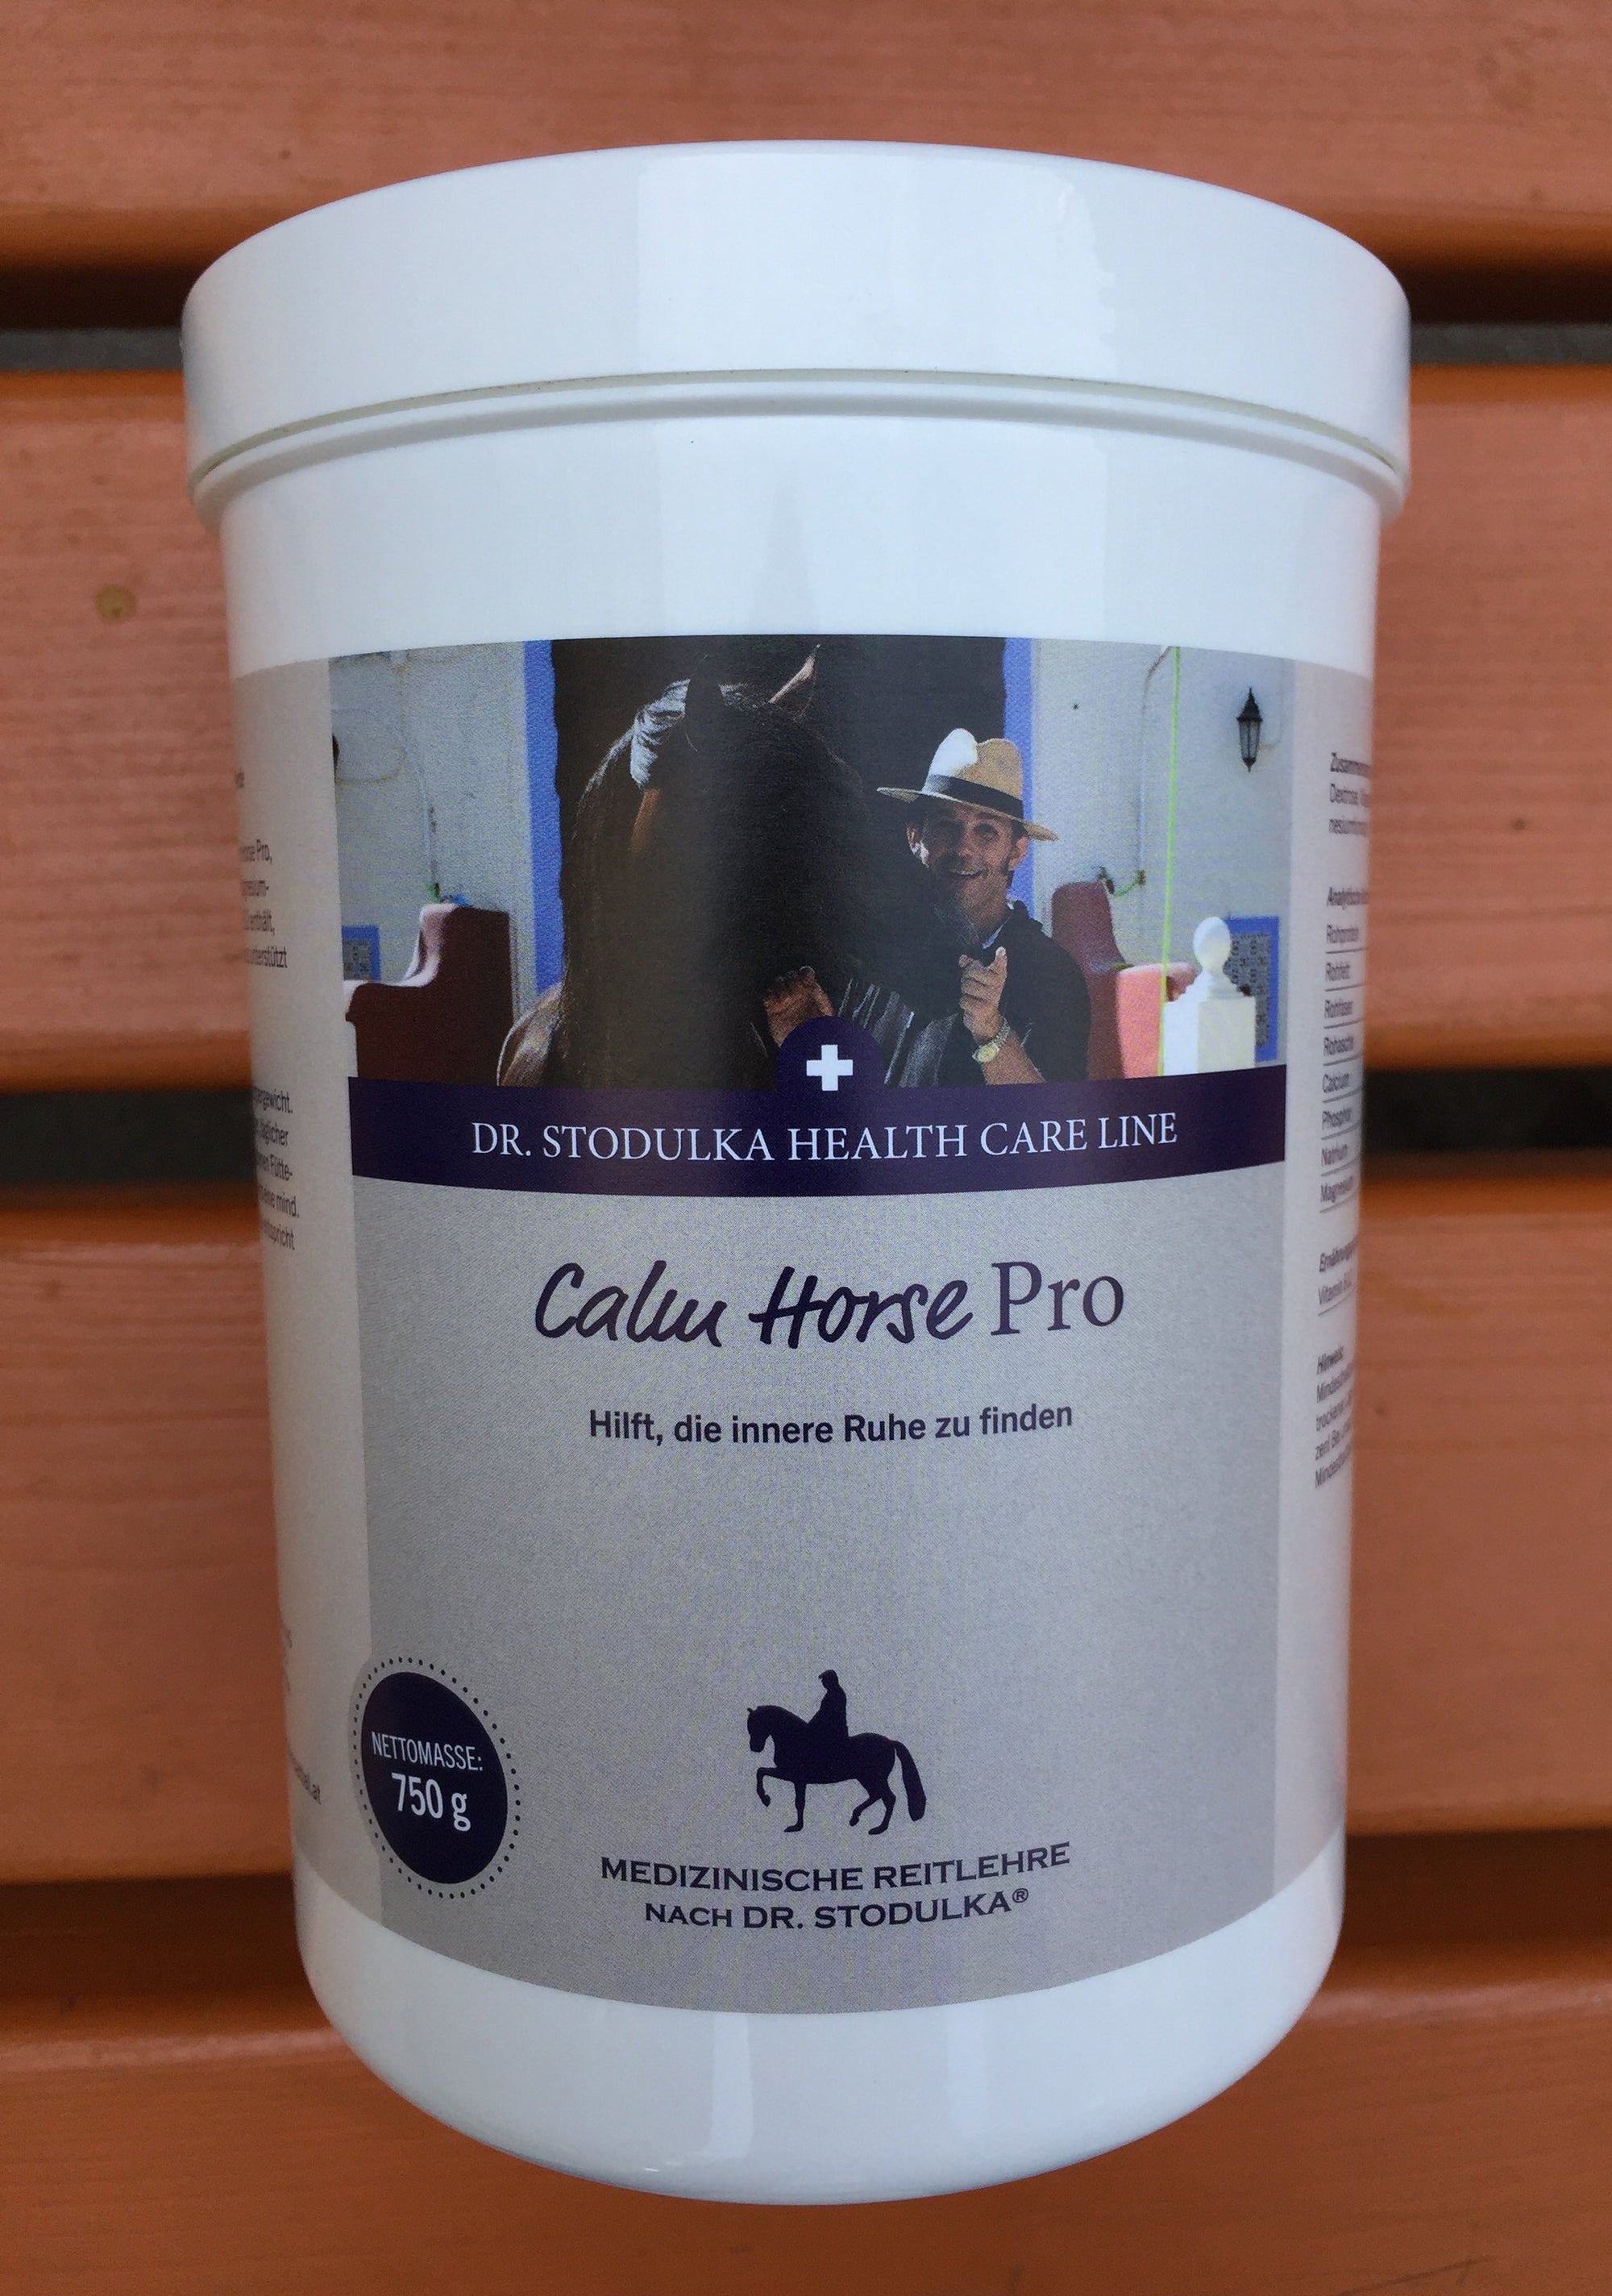 Calm Horse Pro